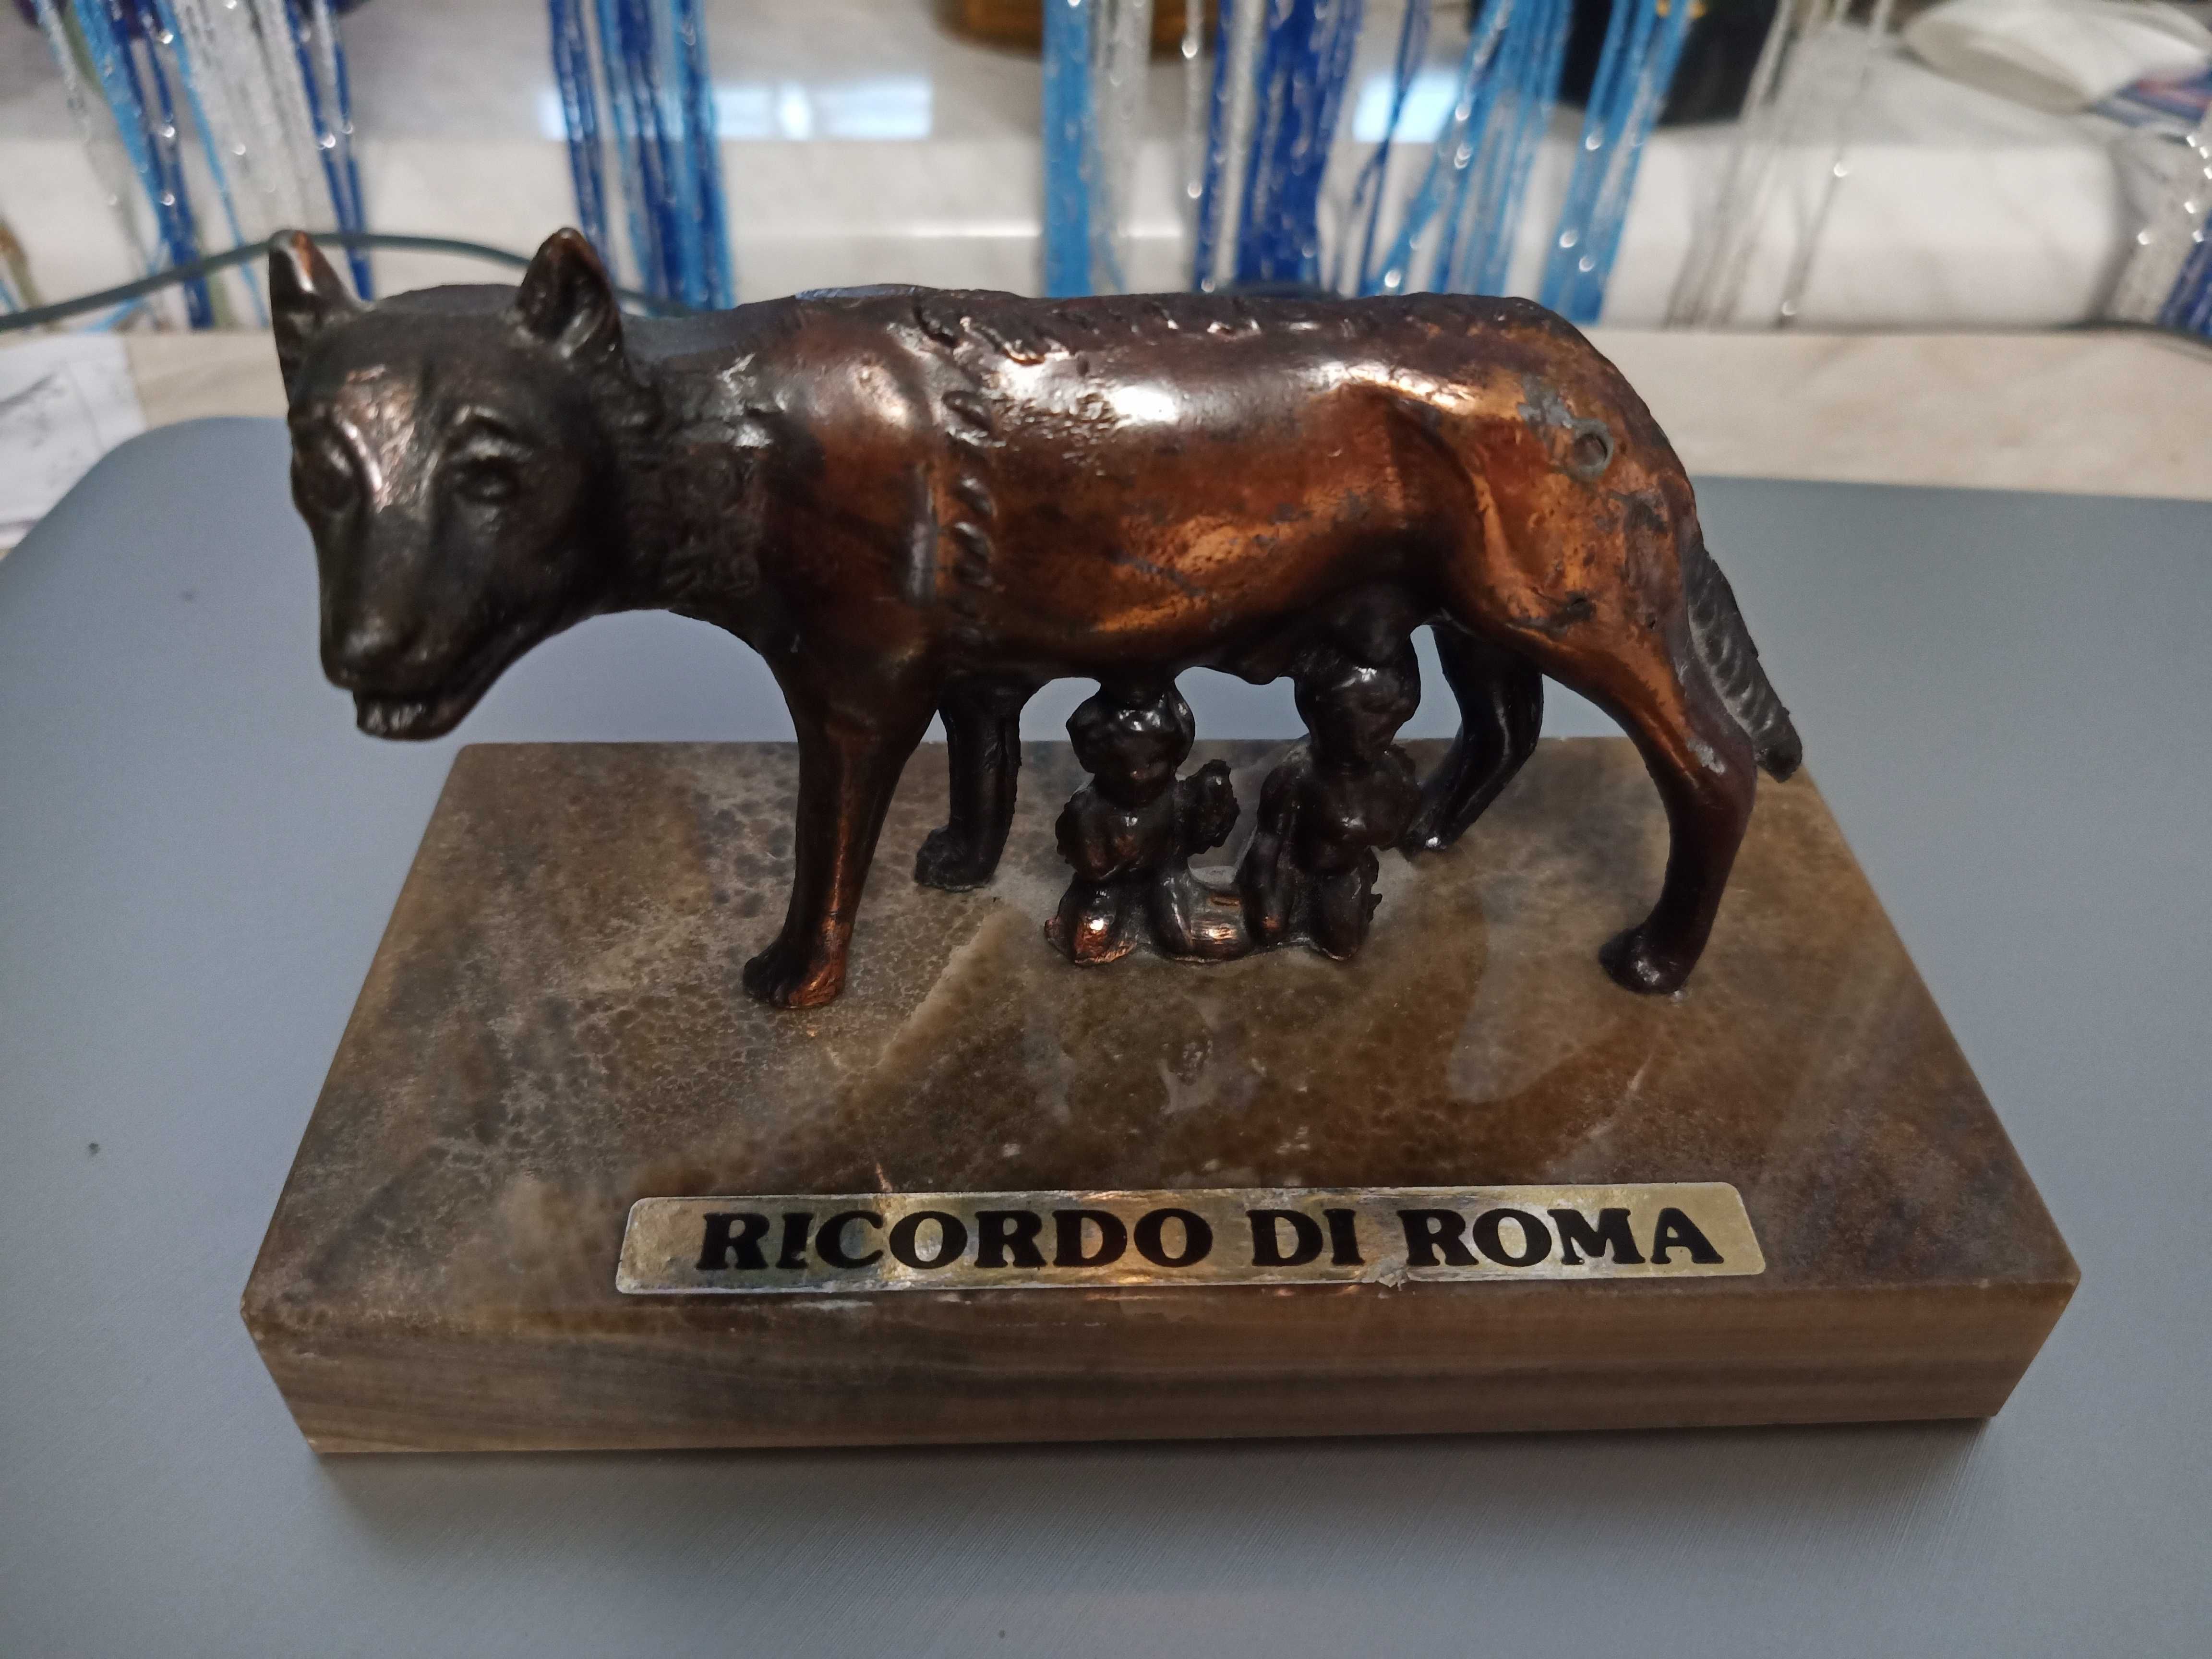 Винтажная итальянская статуэтка  на мраморной основе Ricordo di roma